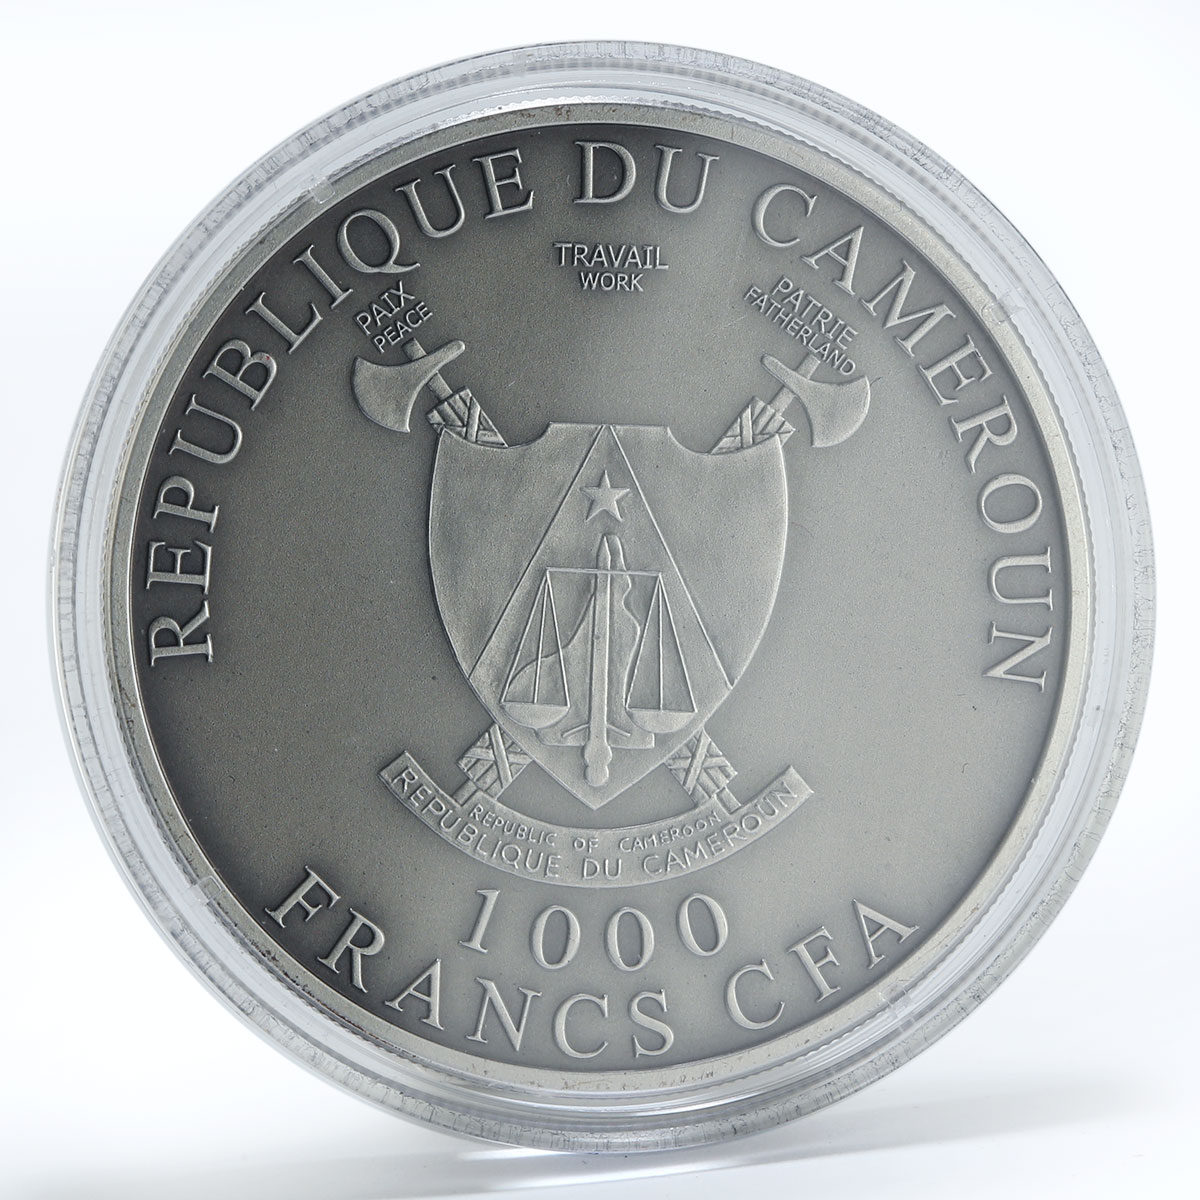 Cameroon 1000 francs Cross River Gorilla silver coin 2012